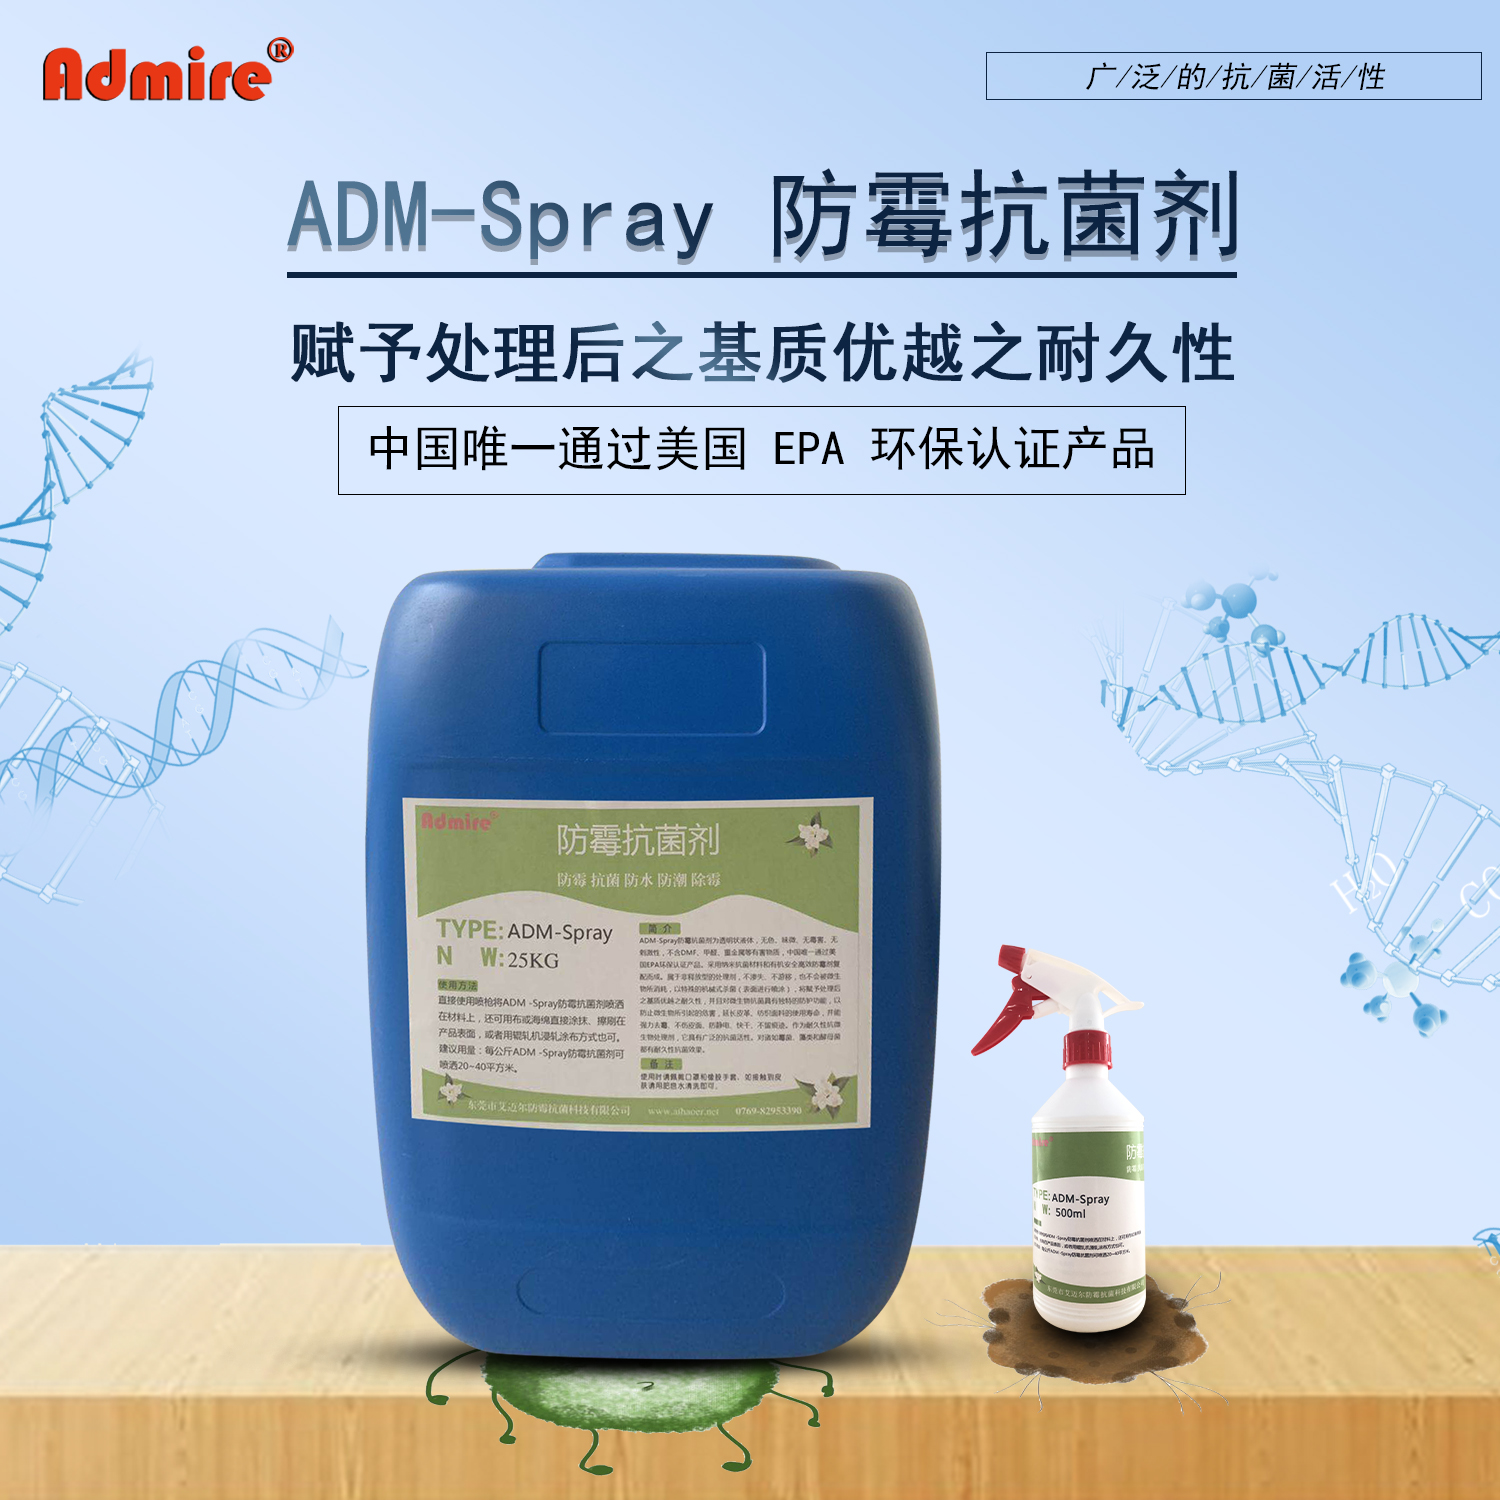 ADM-Spray防霉抗菌剂